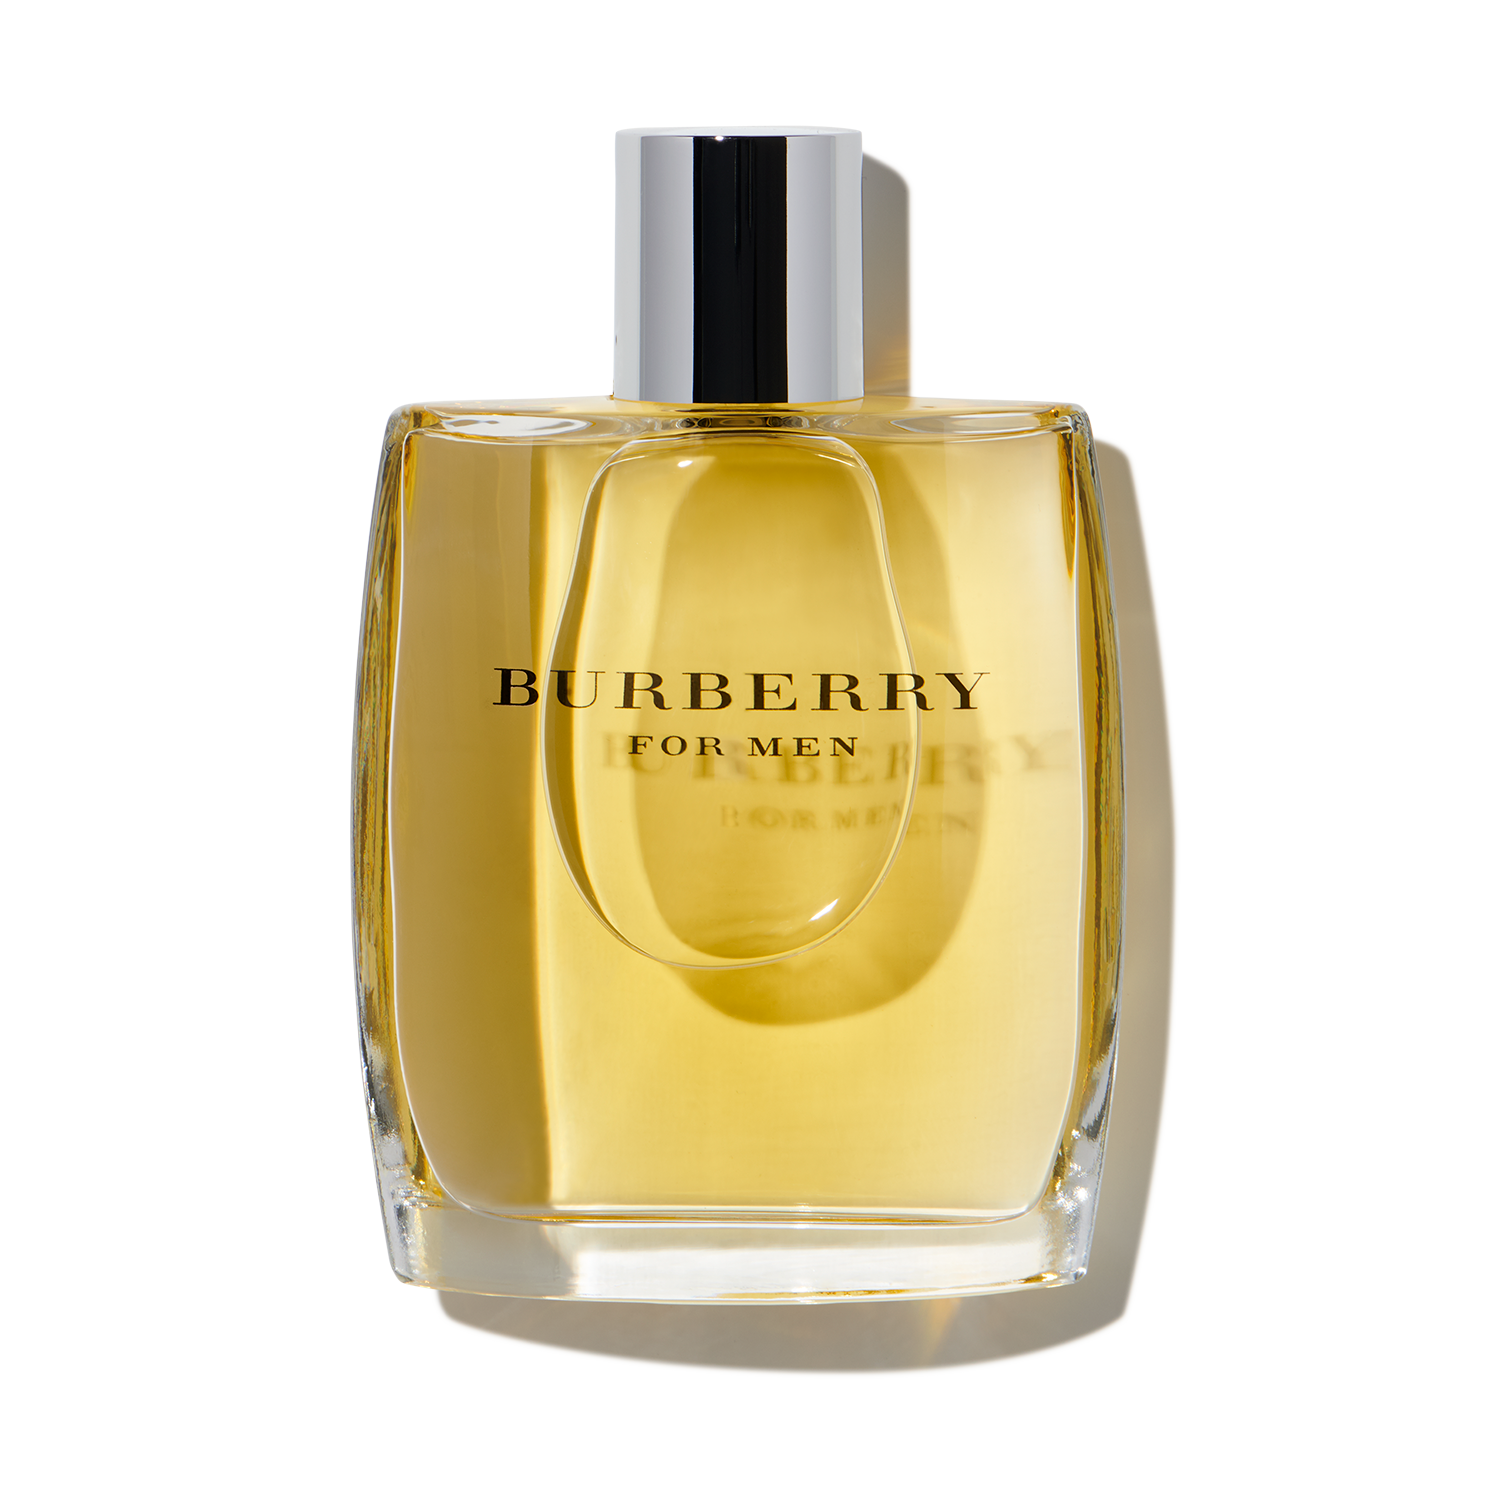 The Top 8 Best Burberry Perfumes for Women - Scentbird Blog